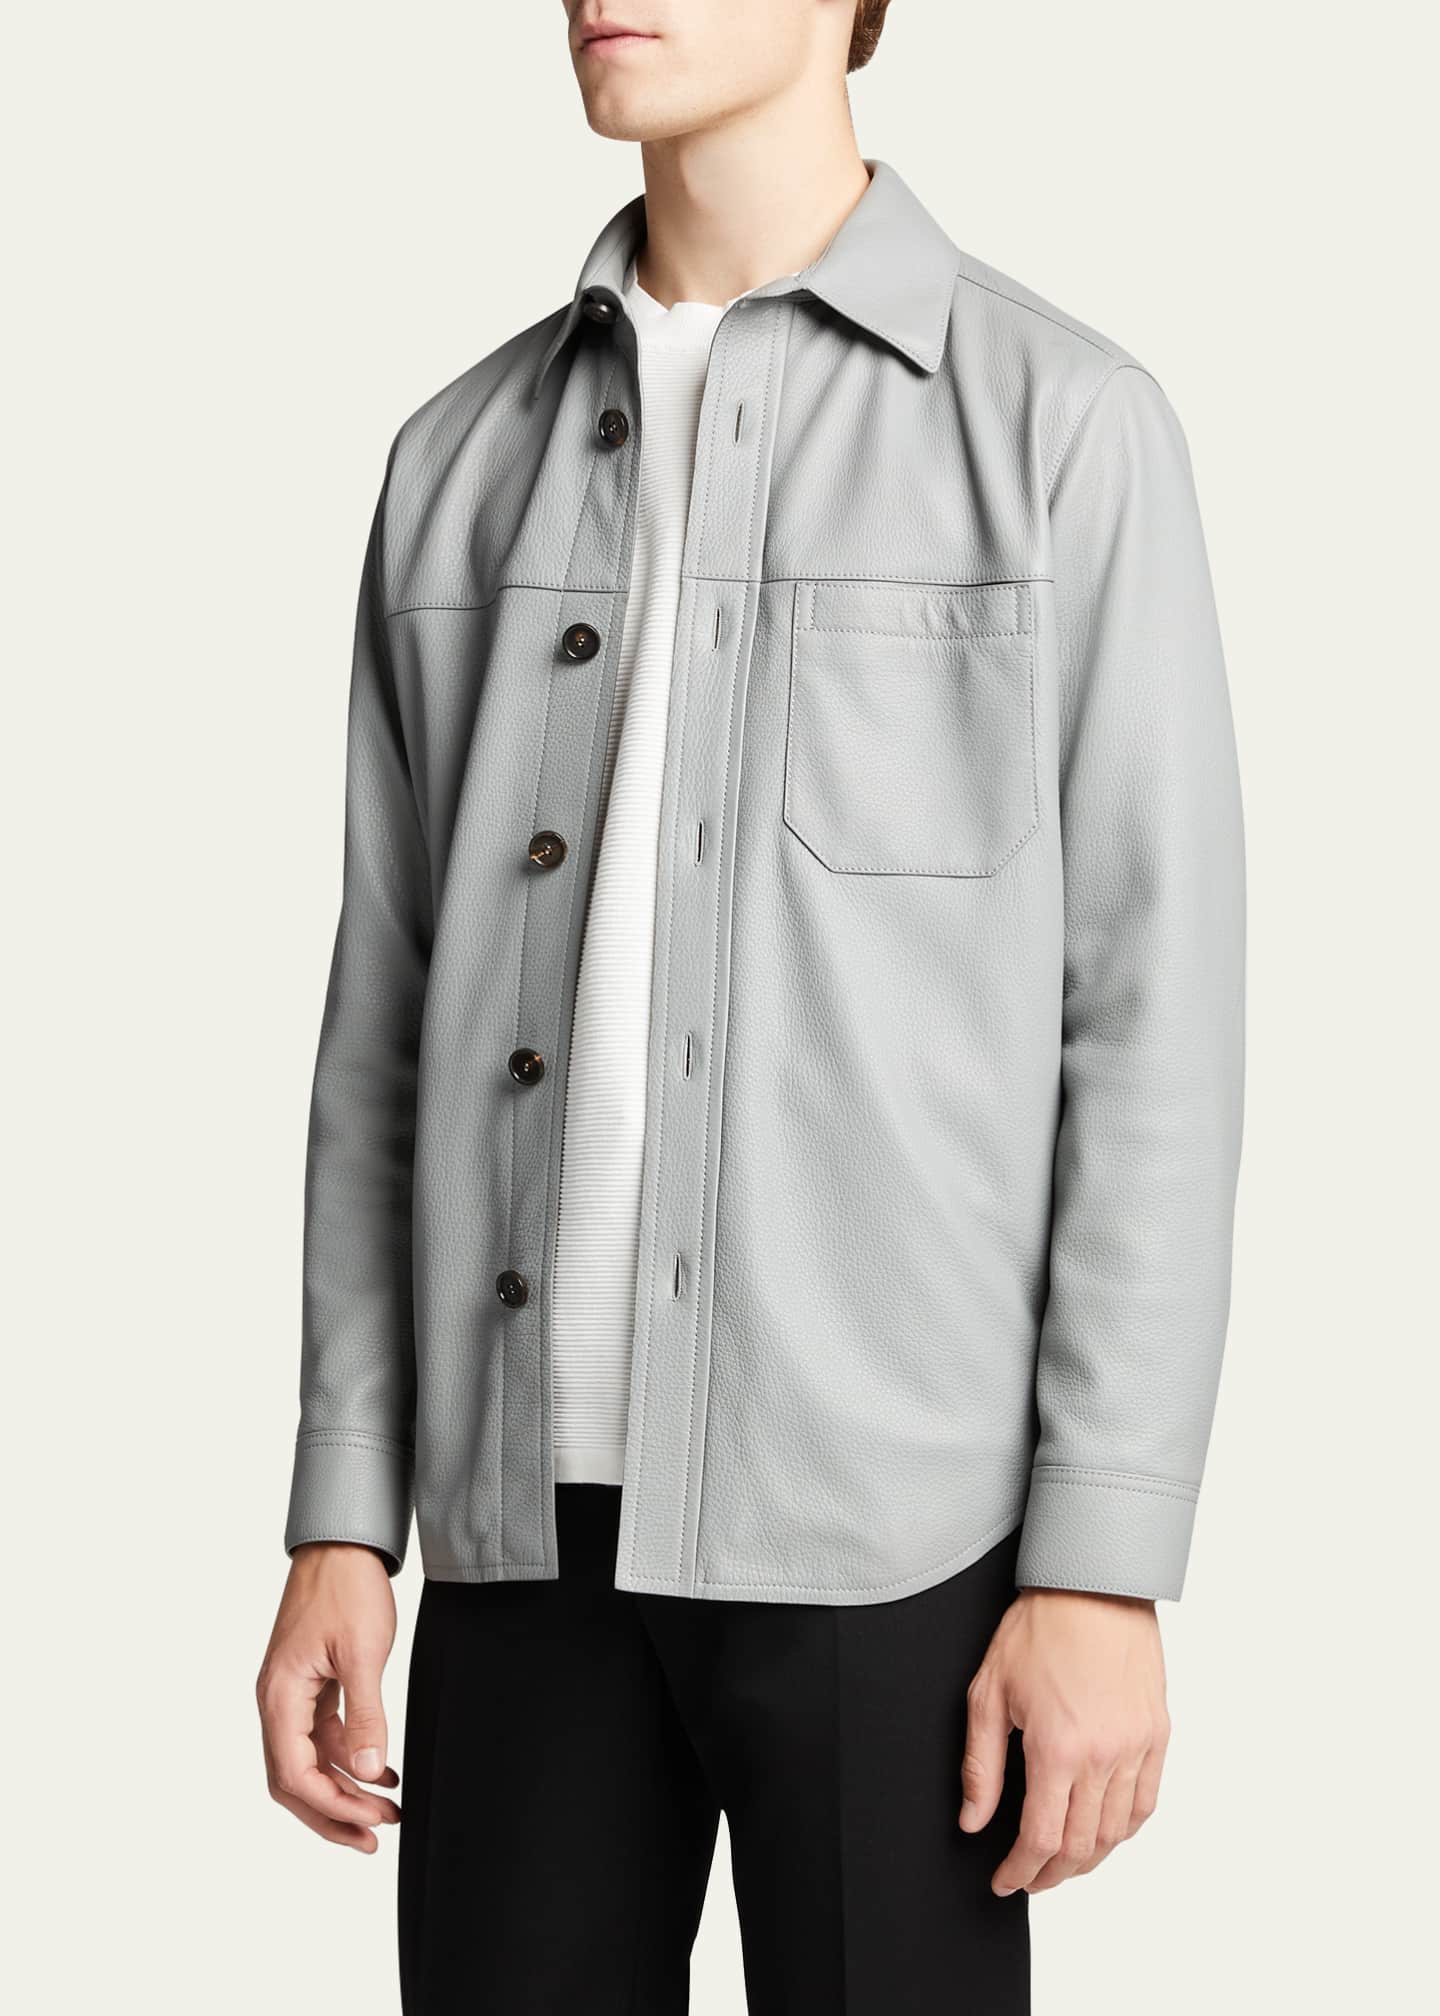 Luxury GUCCI Black Solid Men's Dress Shirt US 15 3/4 EU40 Buttons up Long  Sleeve